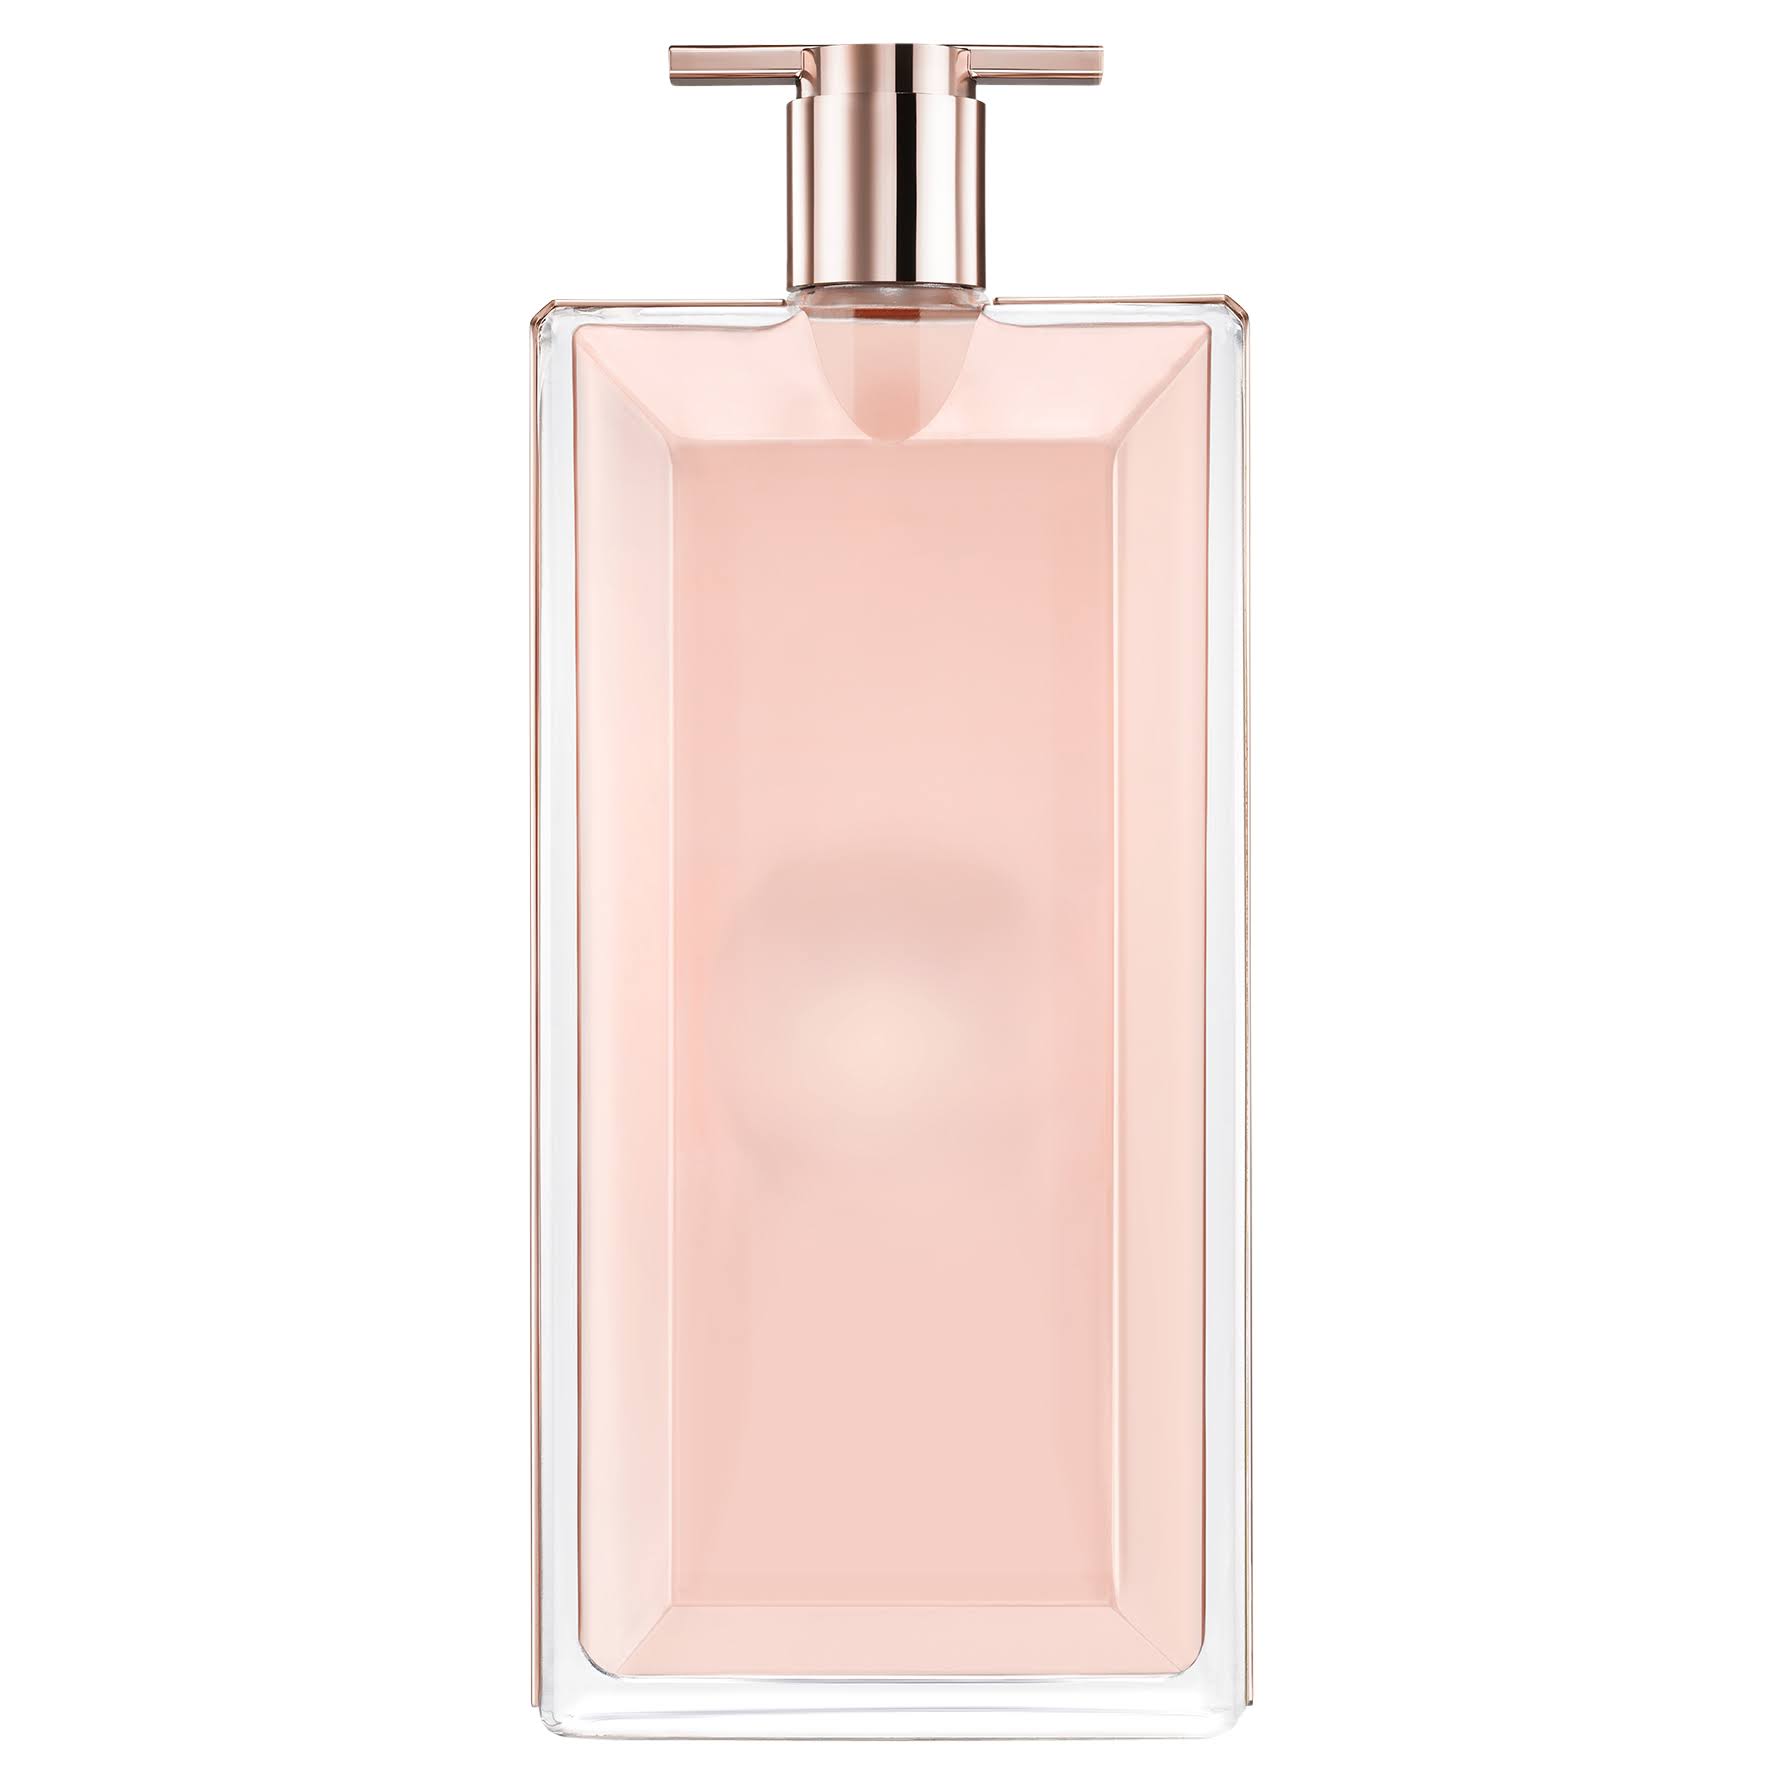 Lancome Women's Idole Eau De Parfum Spray - 50ml